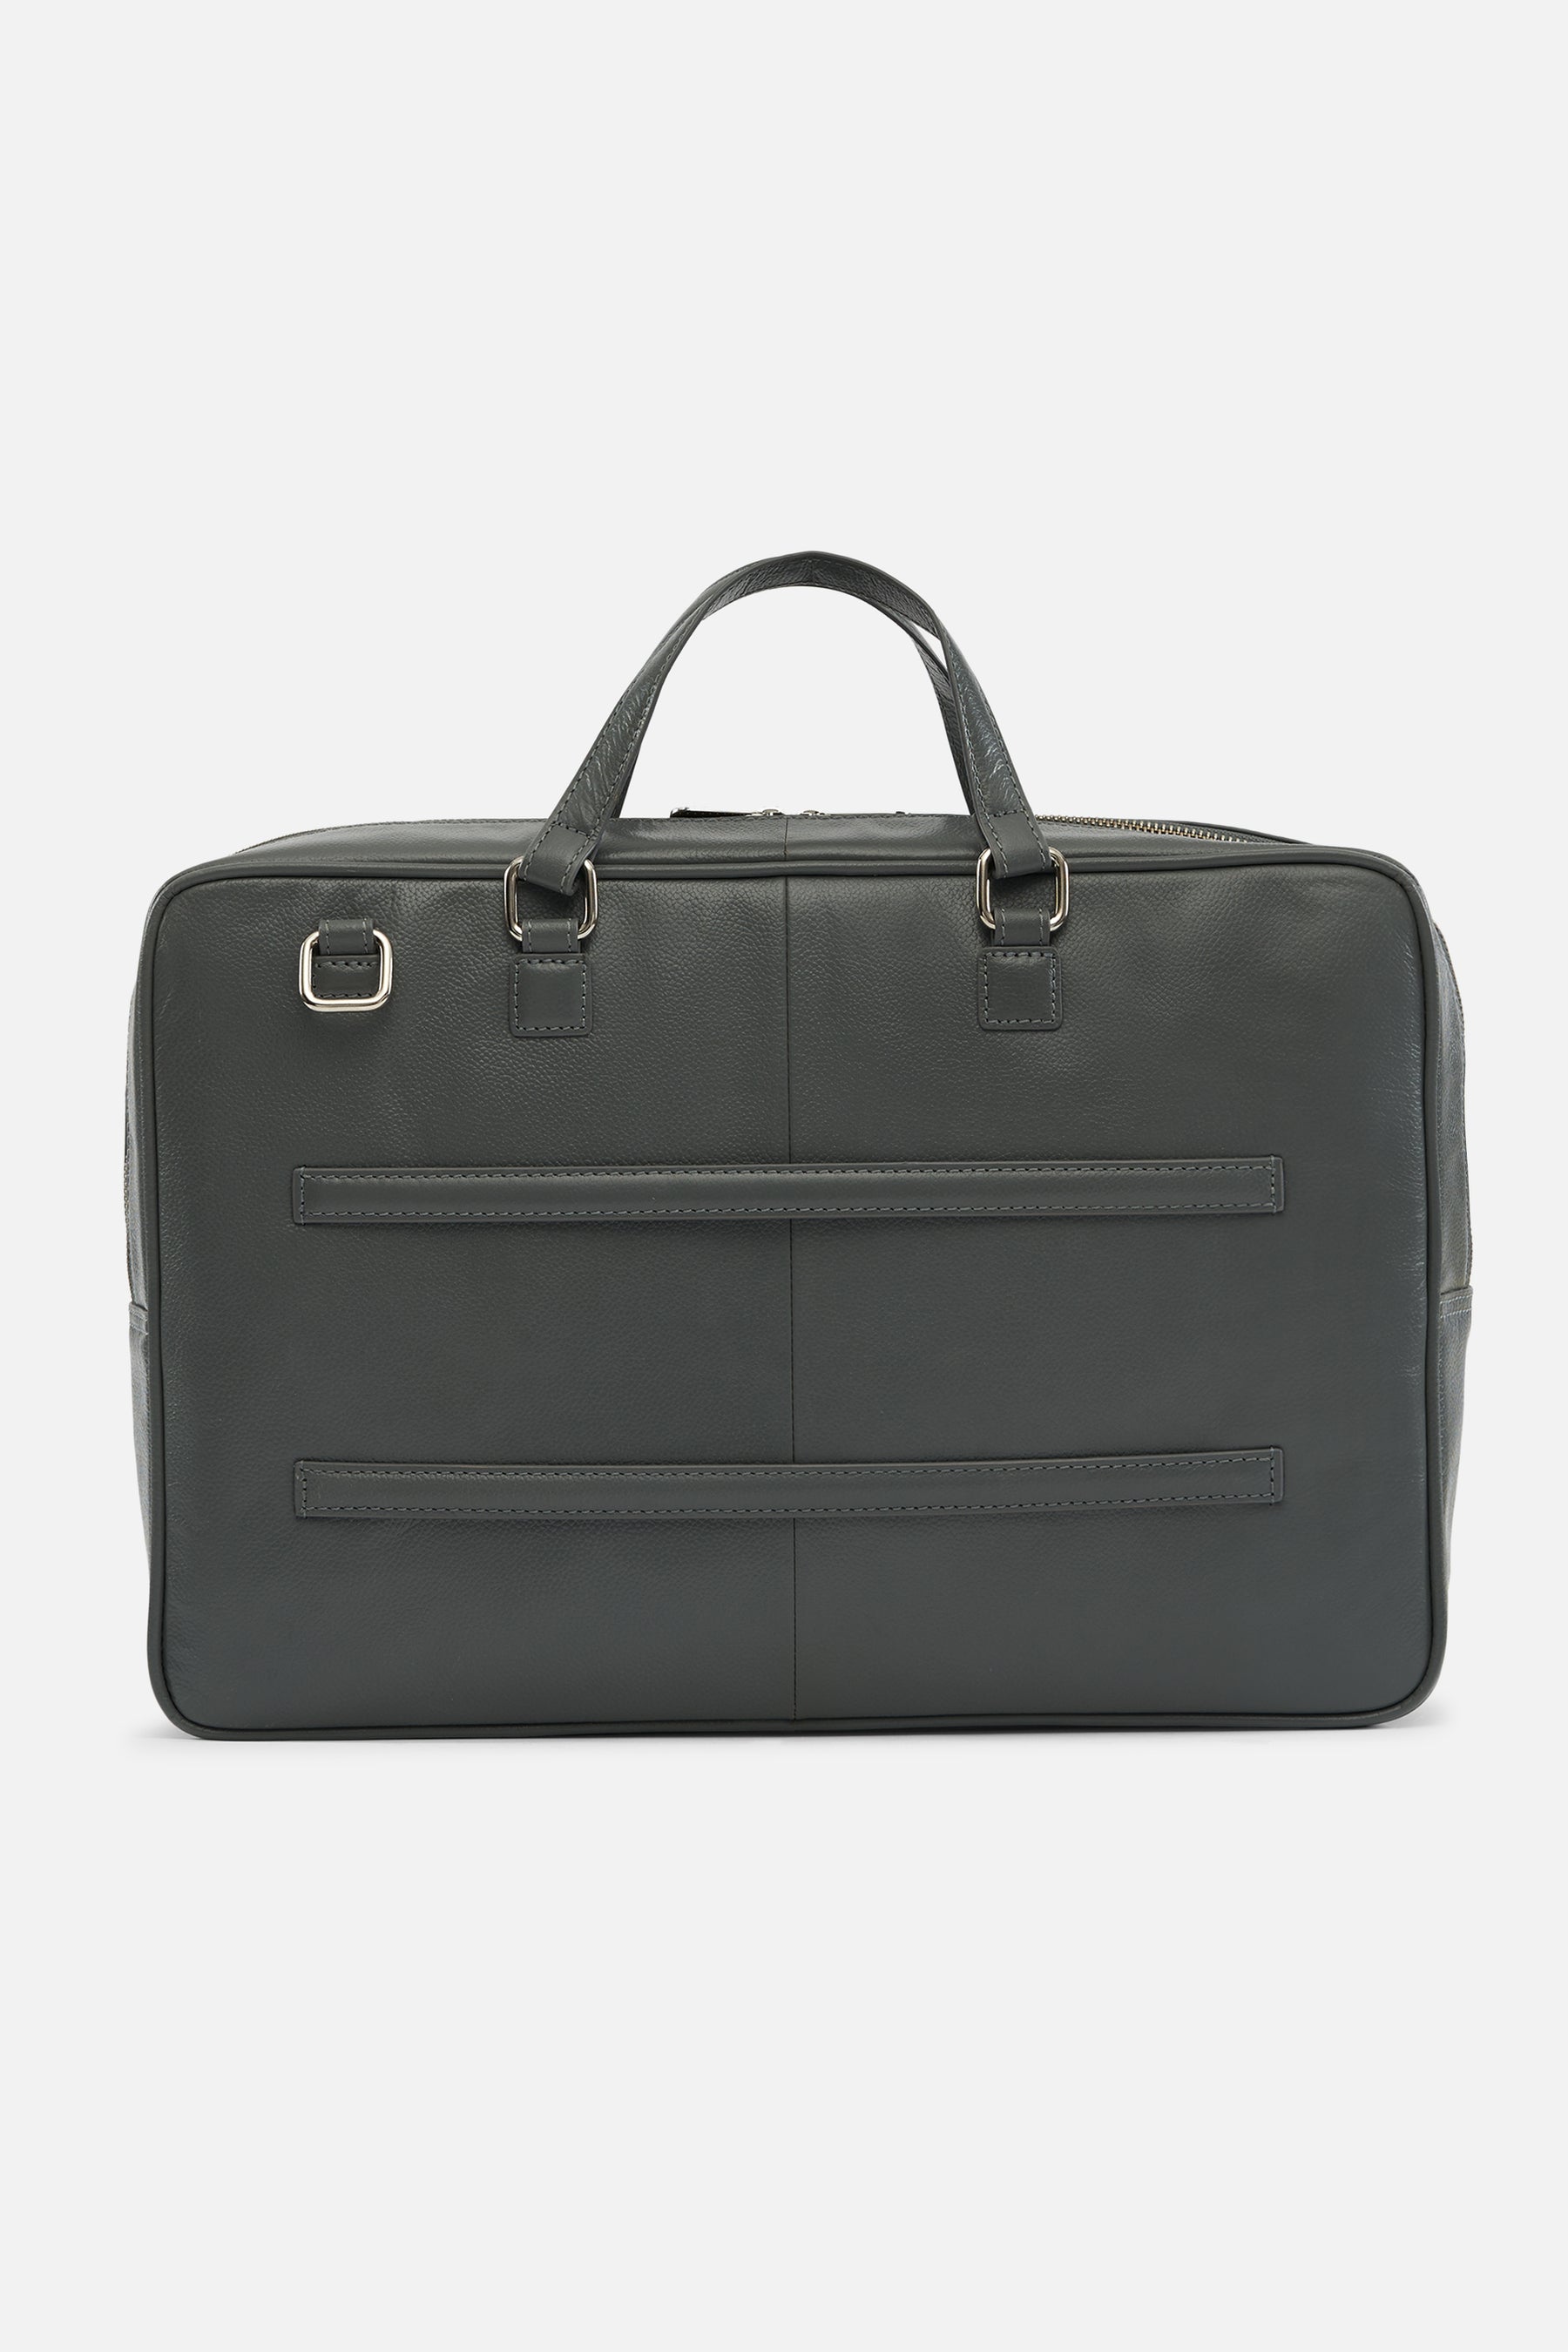 Bronco - Leather Laptop Bag - Gunmetal and Brown